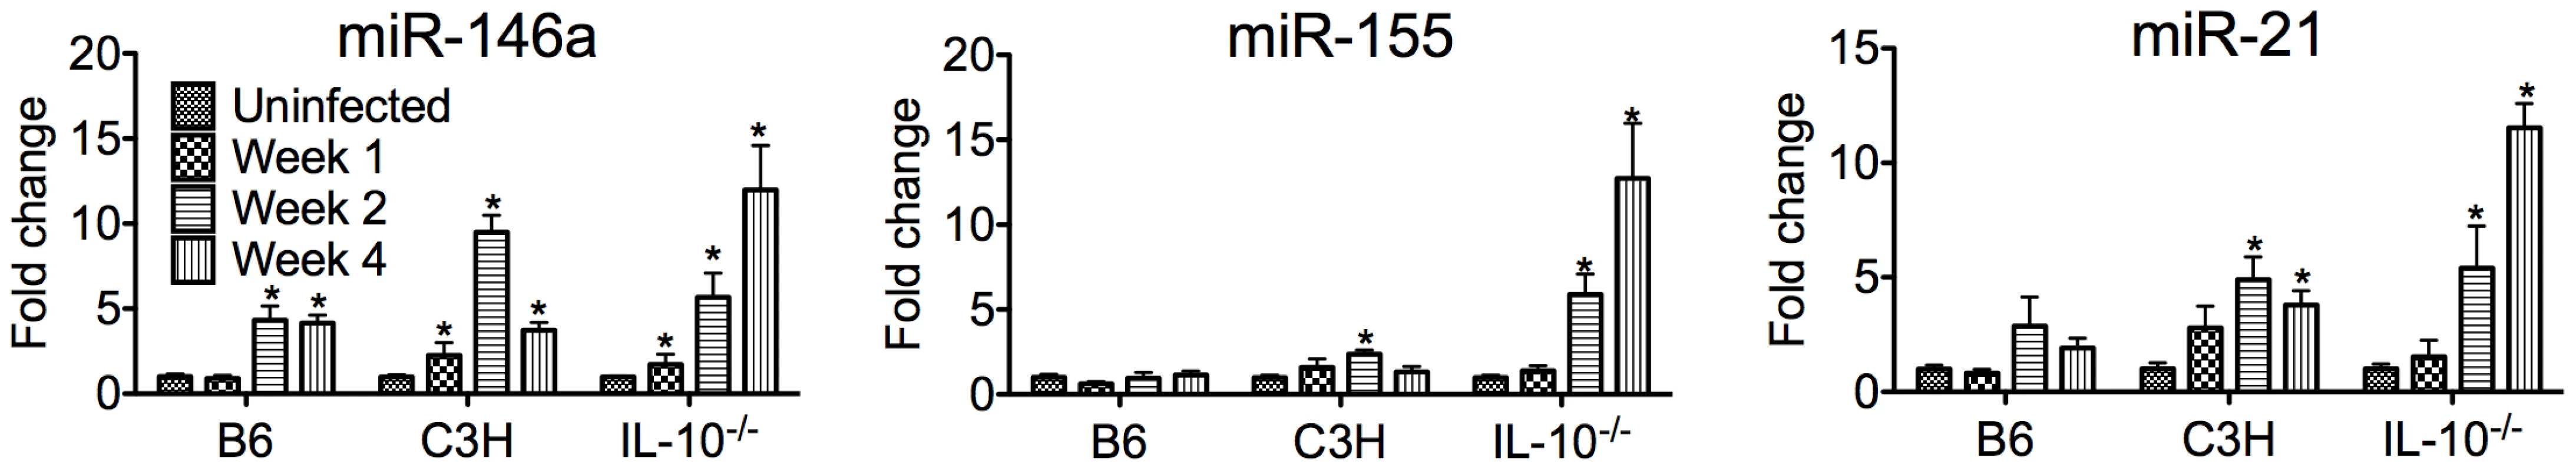 PCR validation of miRNA microarray results.